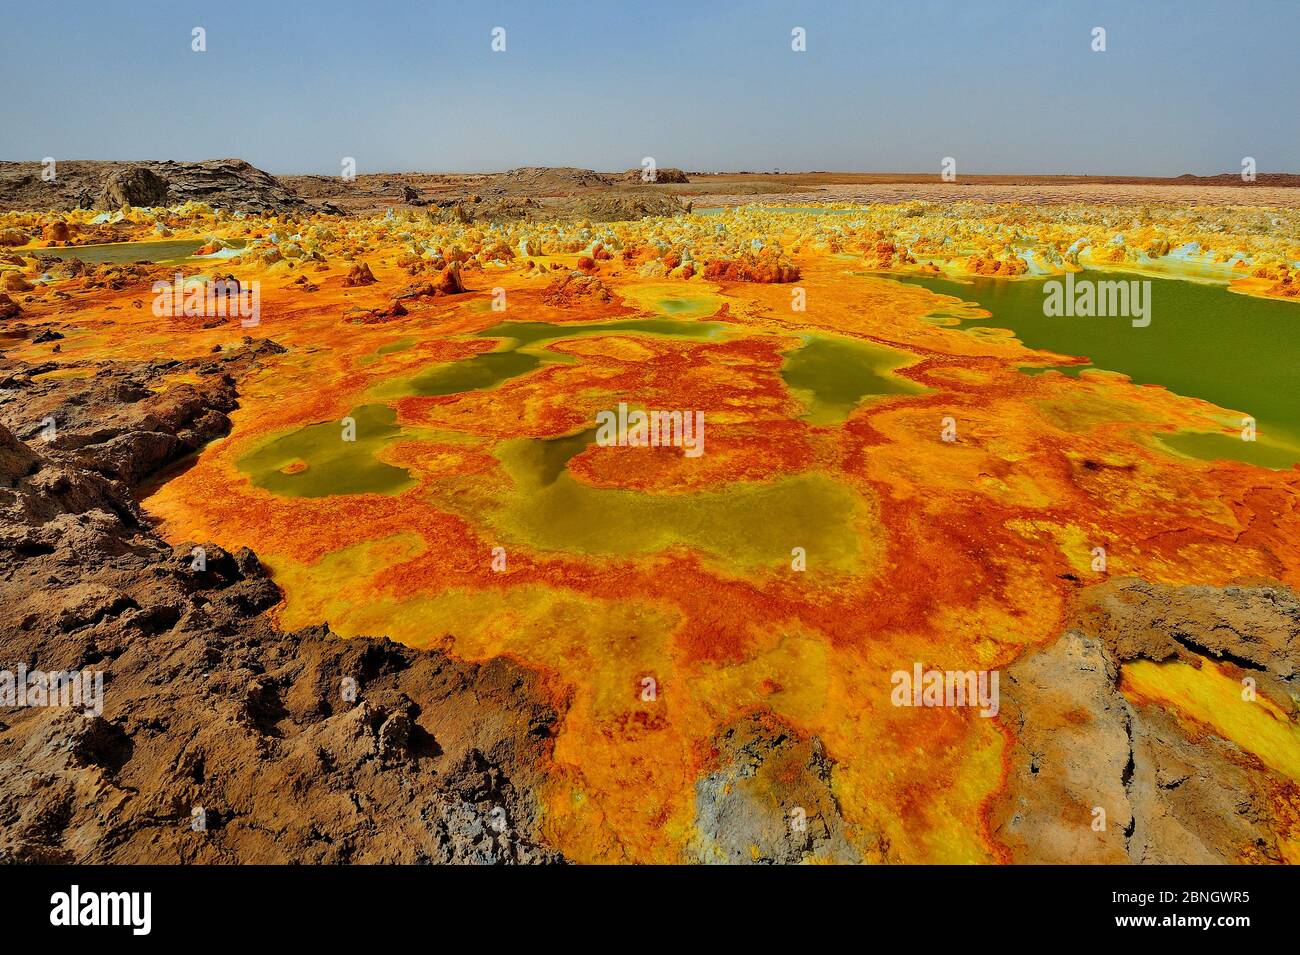 Landscape with salts and sulfur deposits, Dallol, Danakil Depression, North Ethiopia. February 2009. Stock Photo